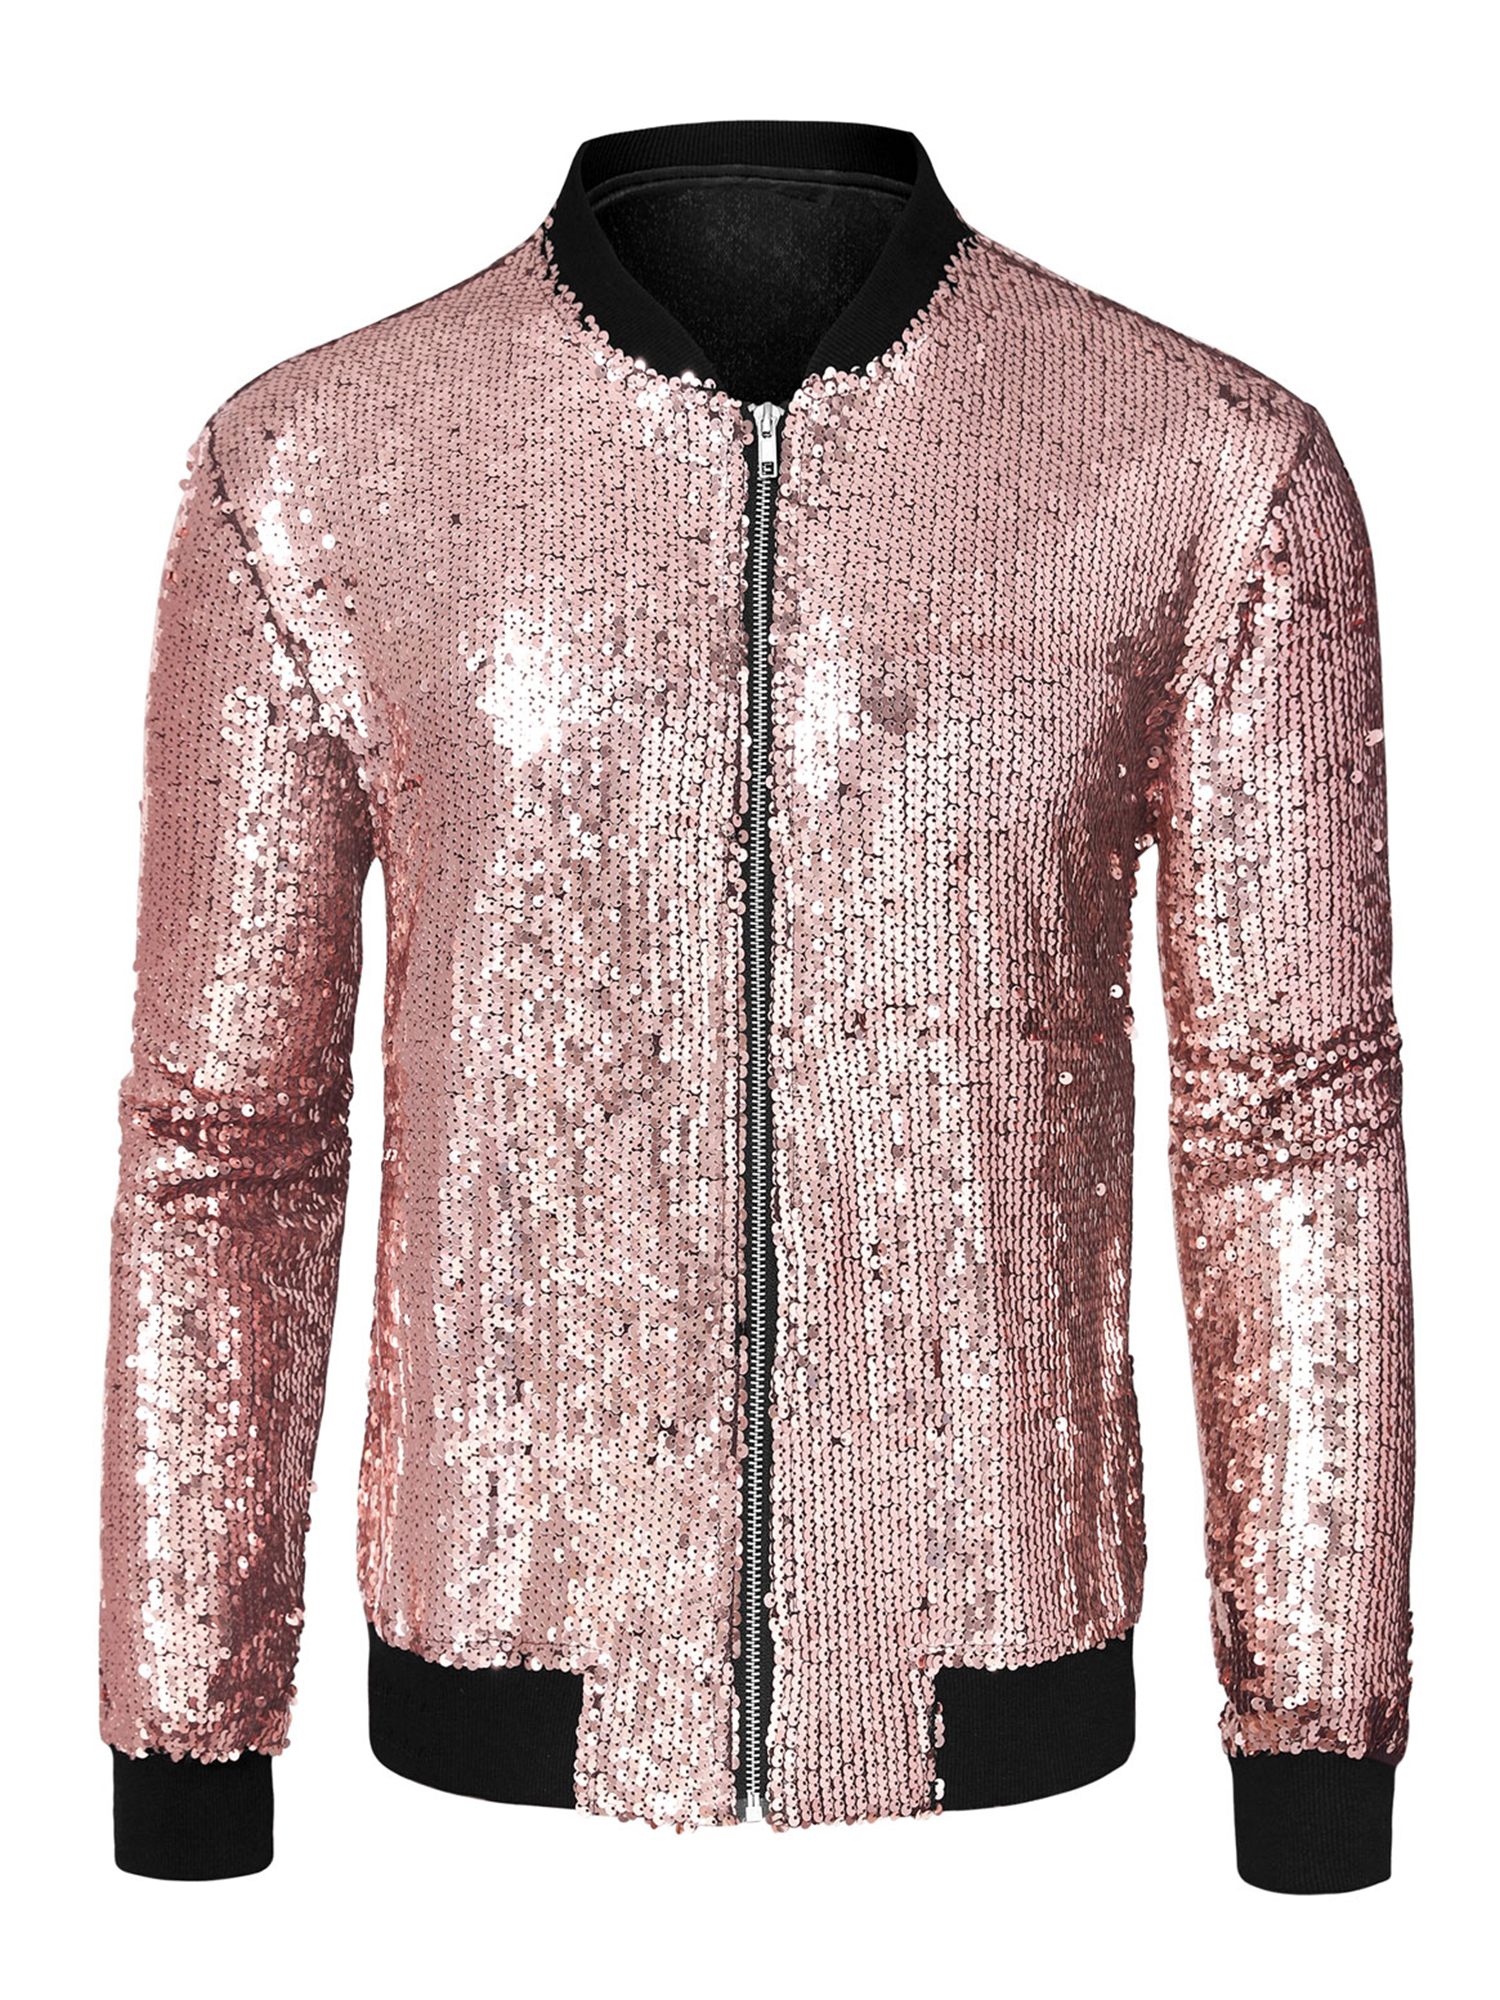 Lars Amadeus Men's Long Sleeve Zipper Glitter Bomber Jacket Coats - image 1 of 6